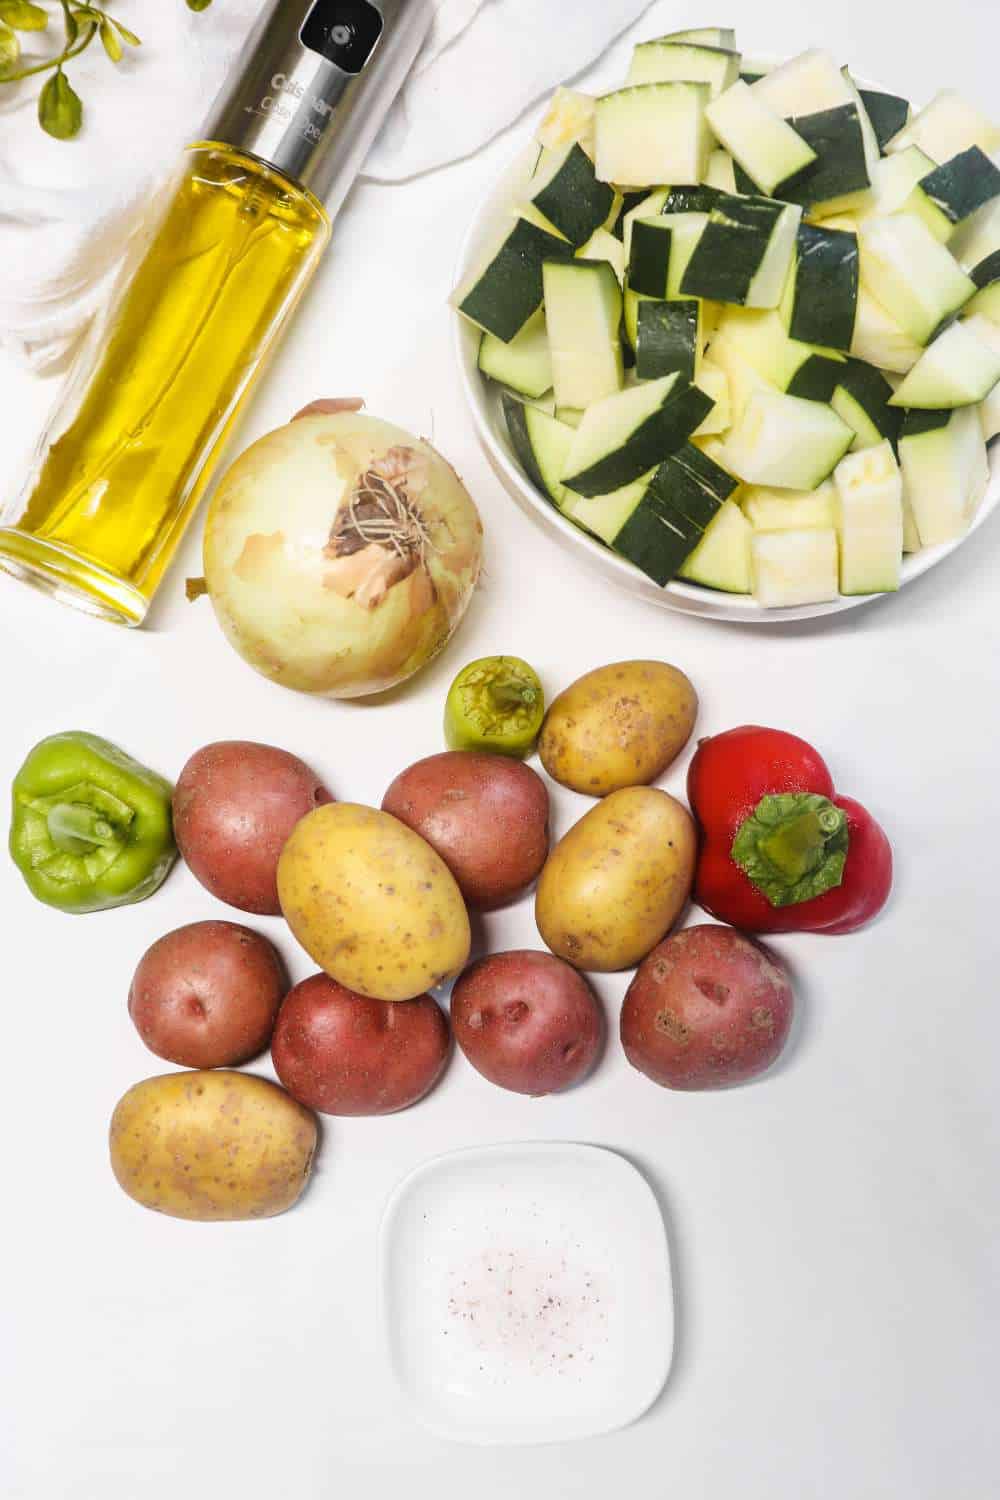 Oven Roasted Breakfast Potatoes Ingredients